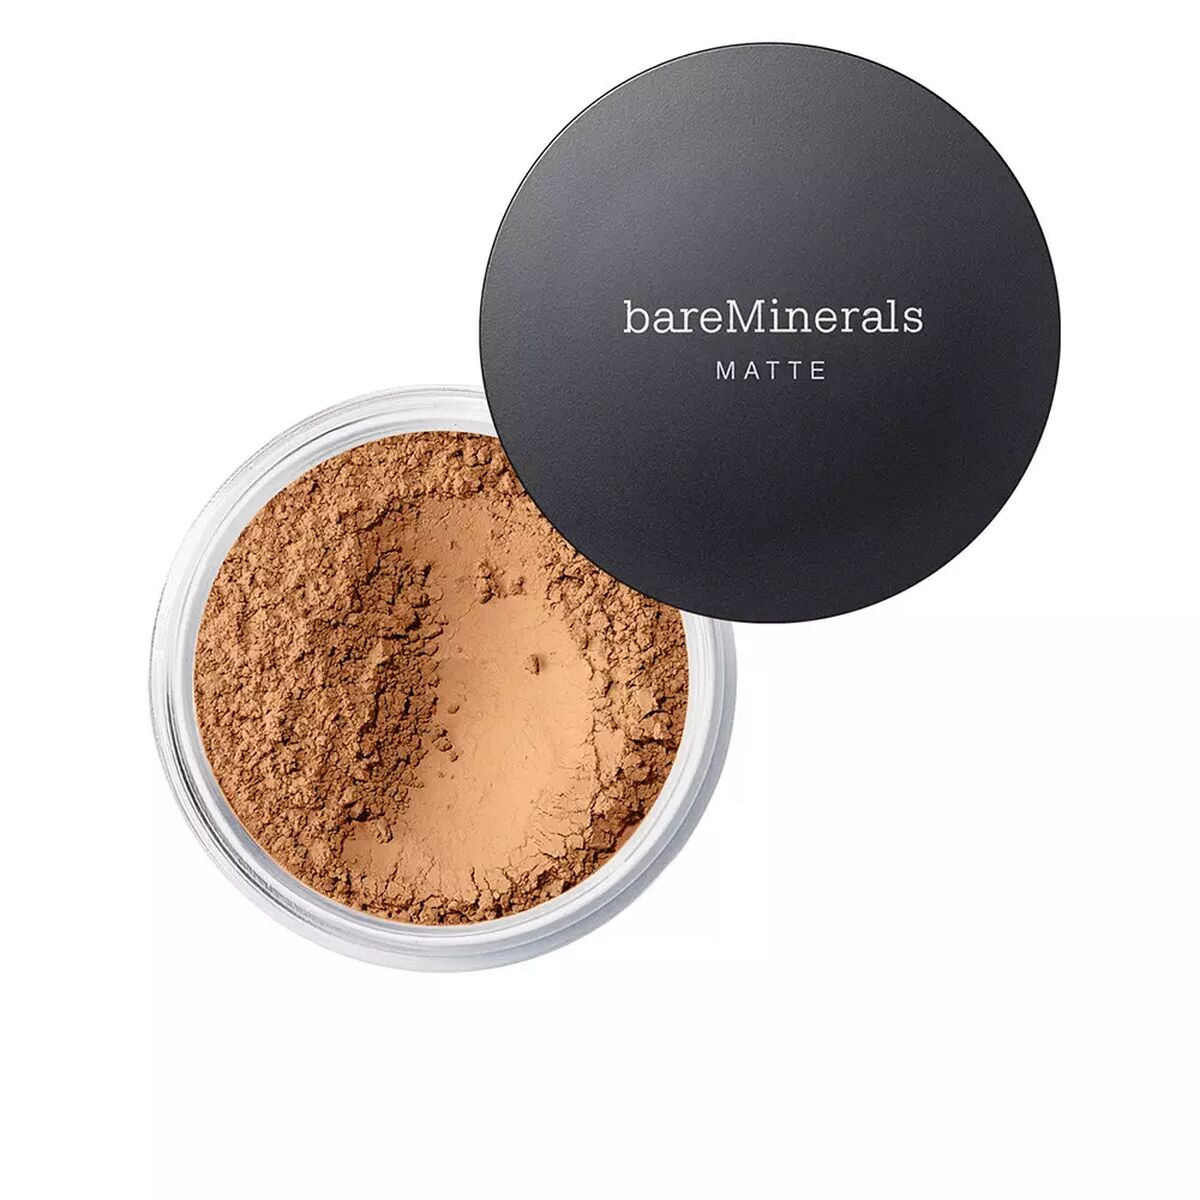 Praškasta make-up baze bareMinerals mat nº 21 neutralni tan spf 15 6 g